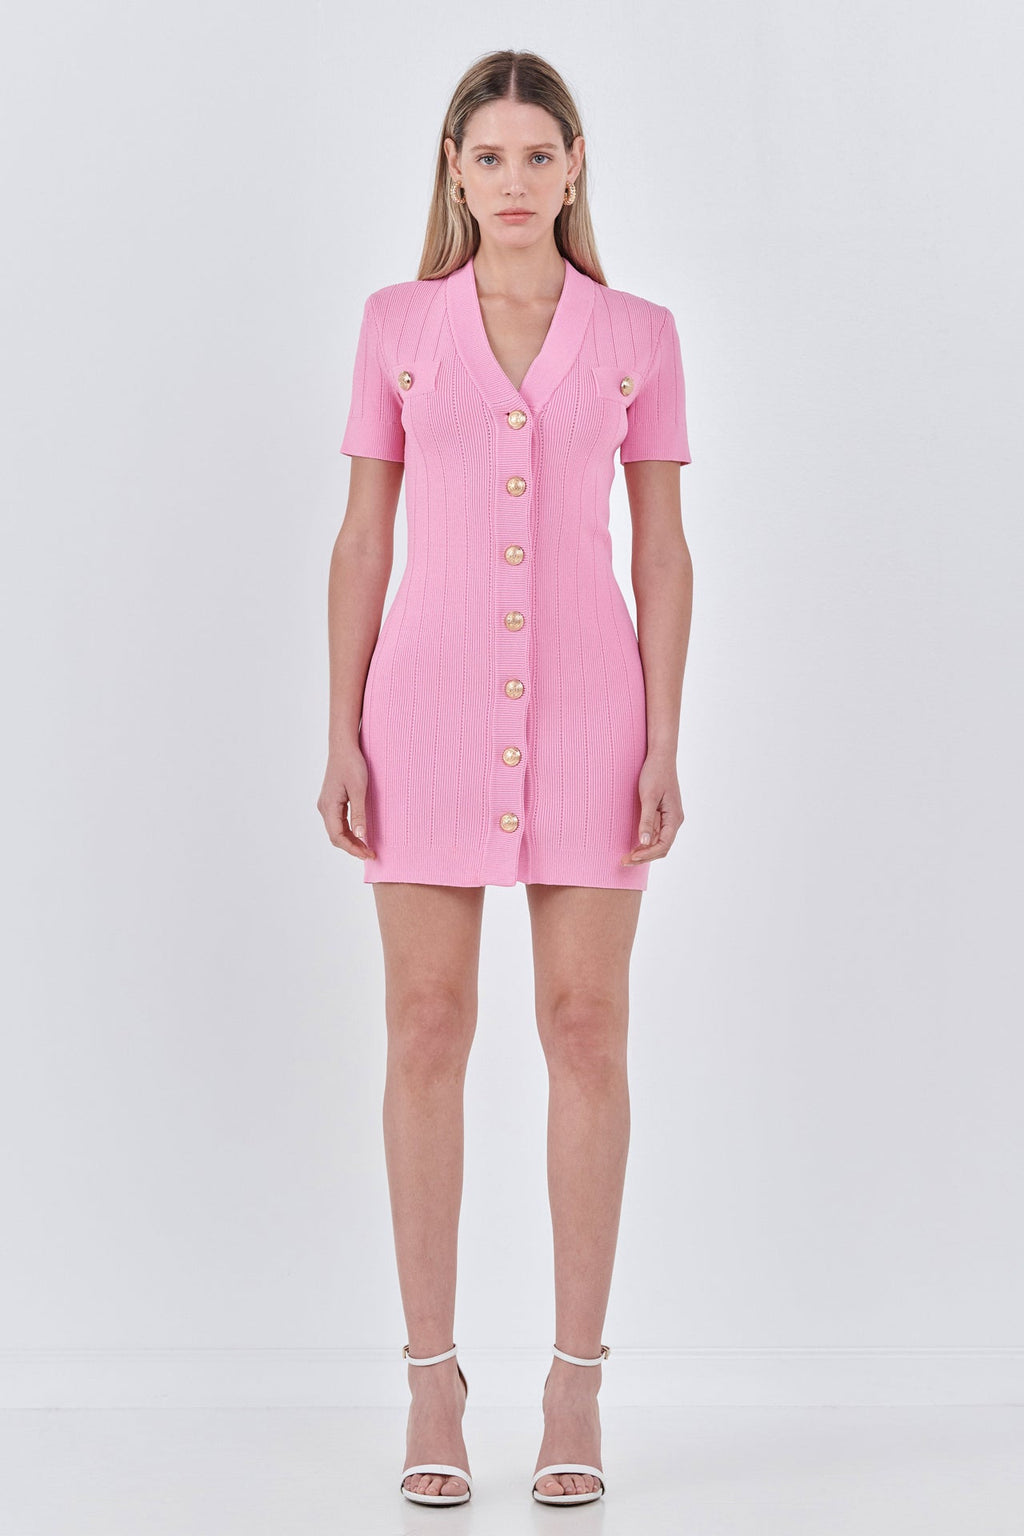 NA Shank Button V-neckline Knit Mini Dress